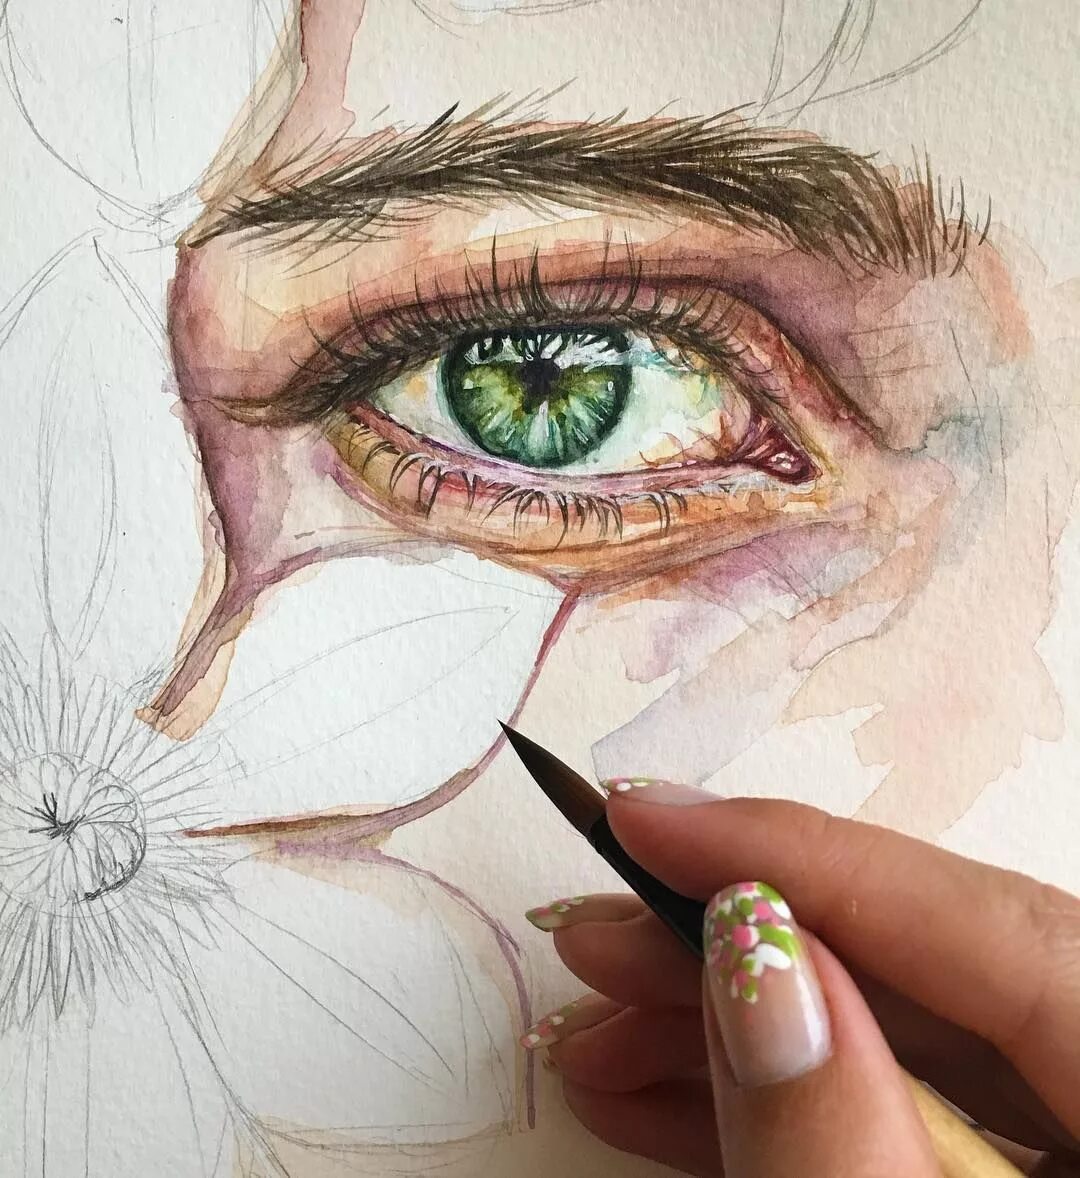 Painting sketching. Глаз акварелью. Глаза рисунок. Глаз акварельными карандашами. Глаз нарисованный акварелью.